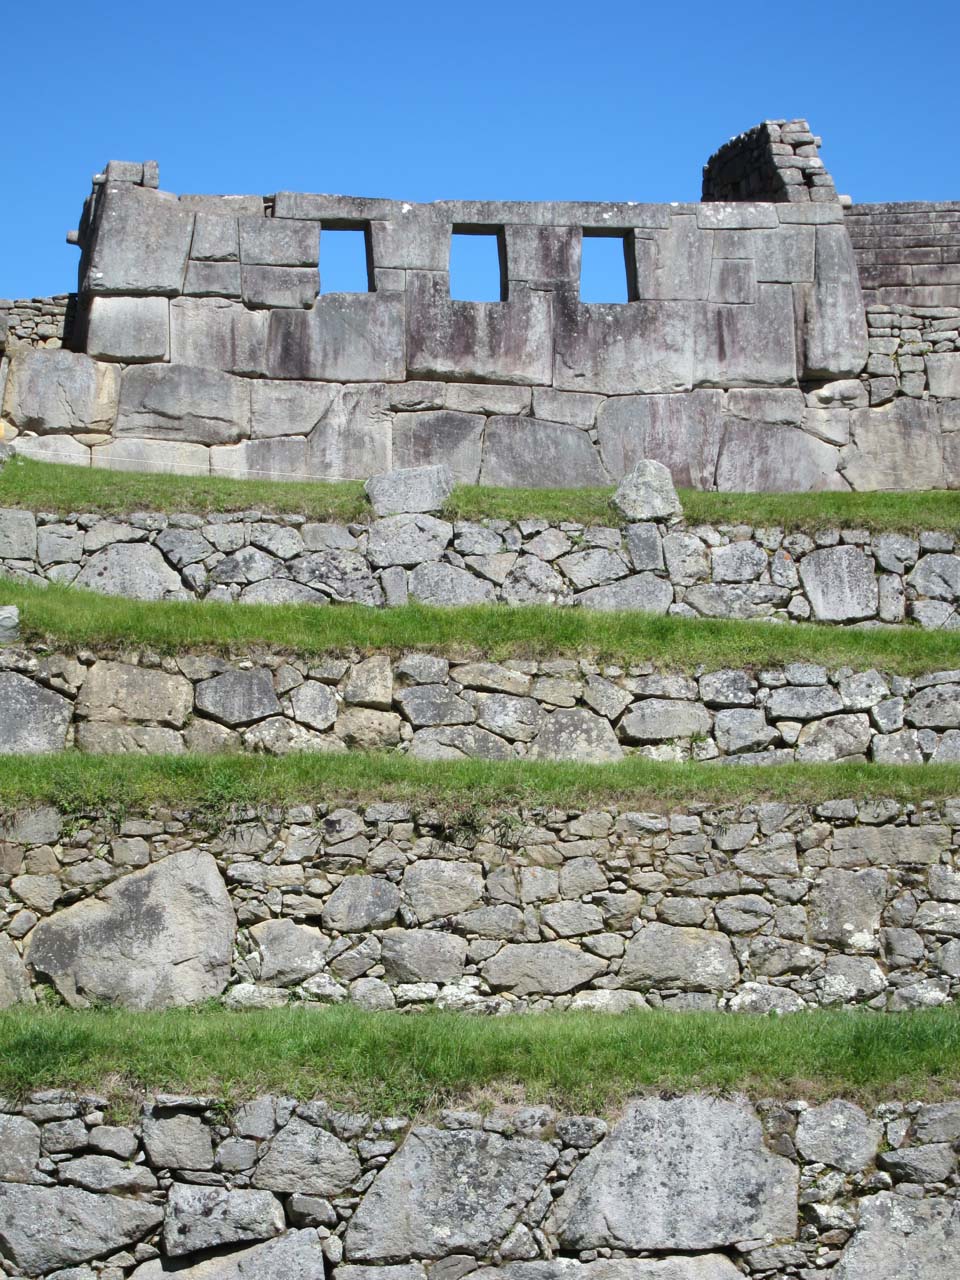   Temple of the Three Windows, Machu Picchu  